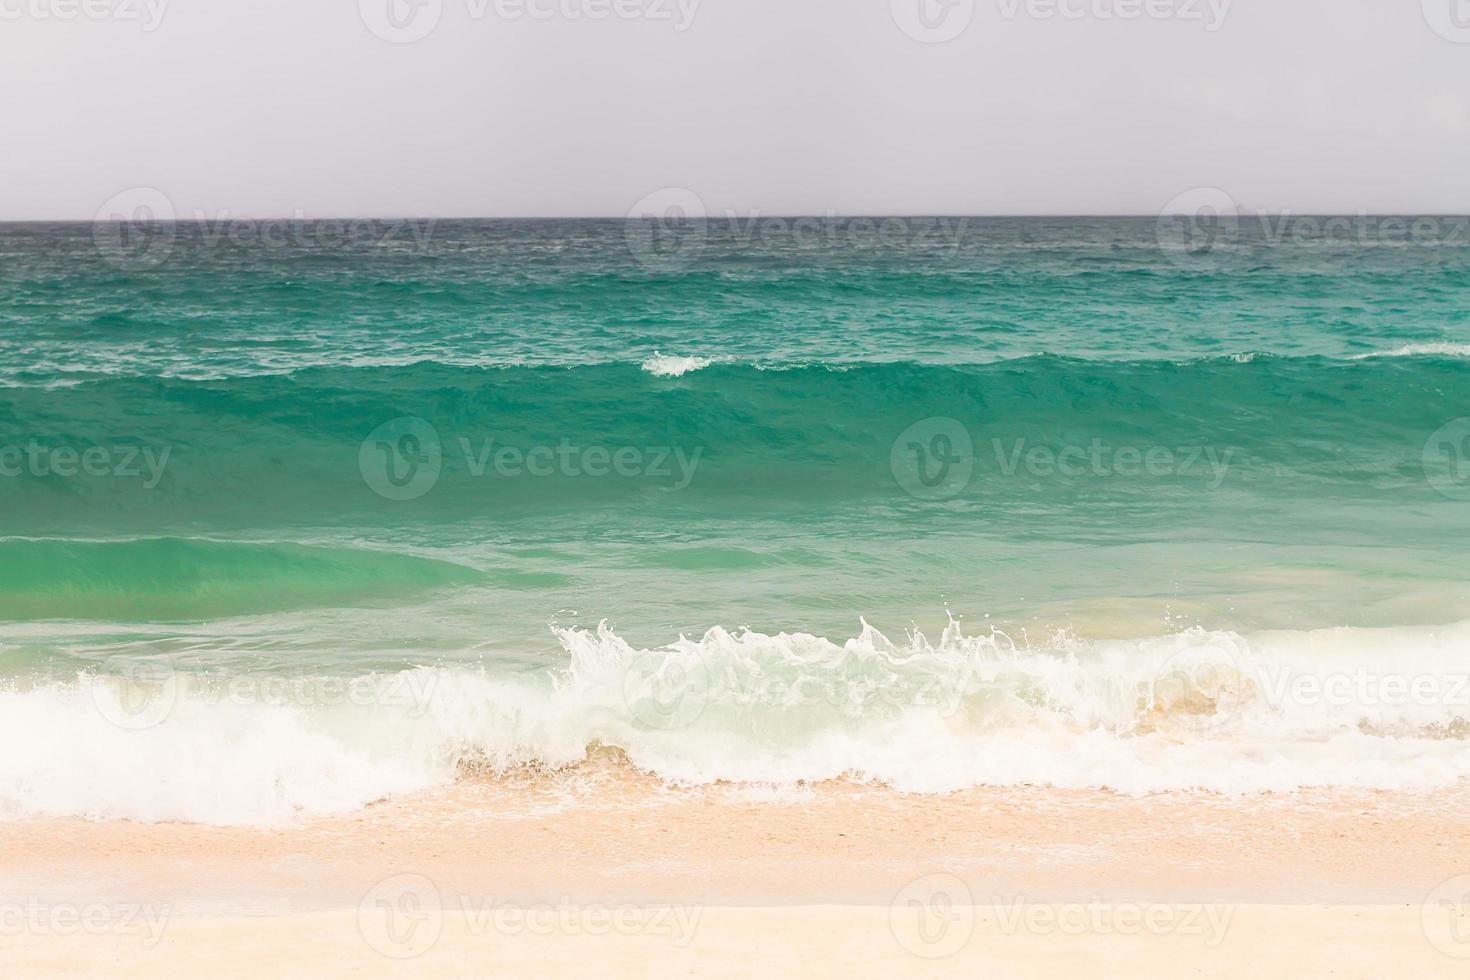 Big waves in rough seas photo